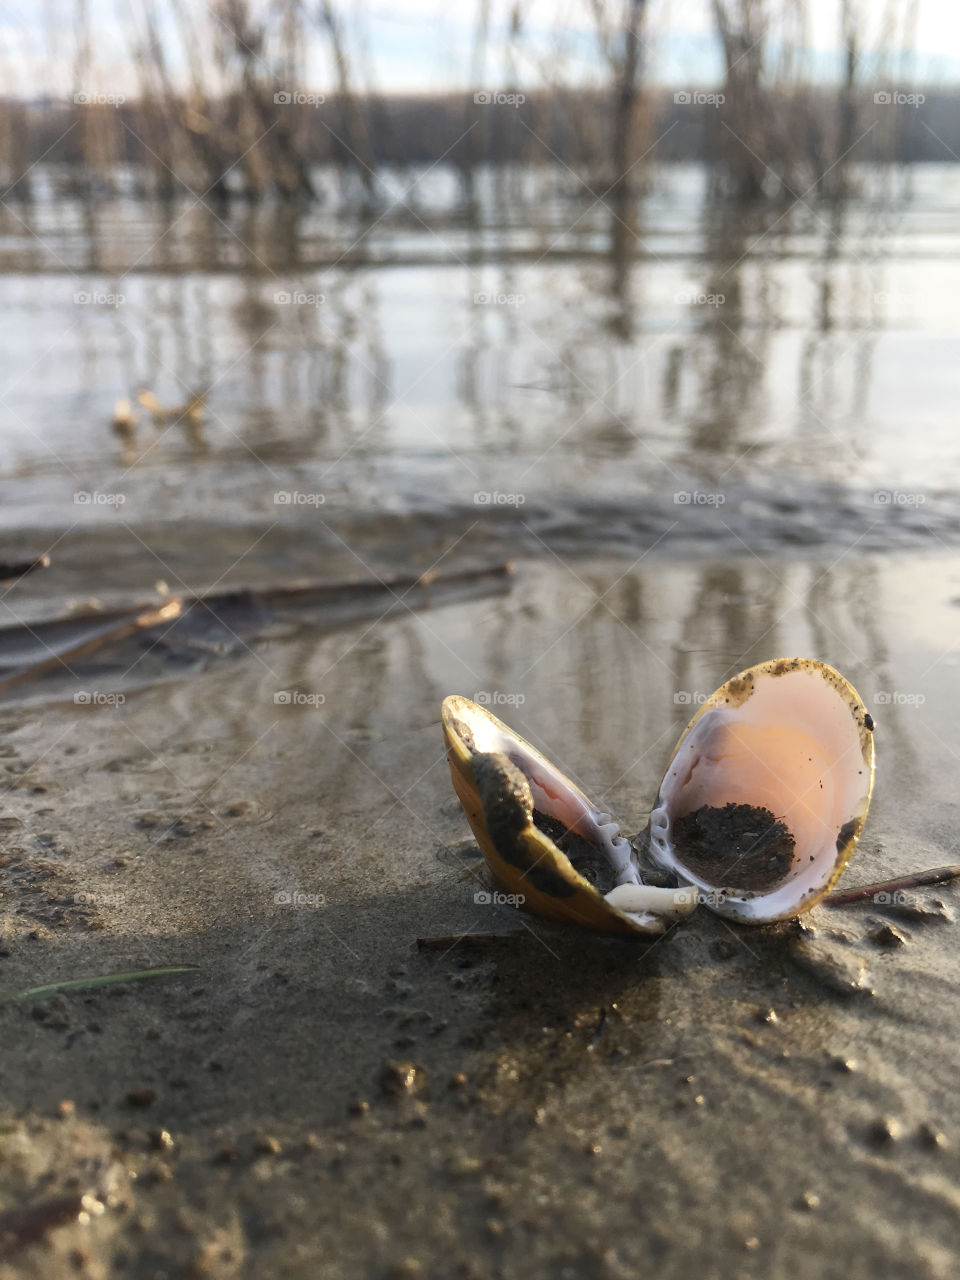 Beautiful shell on the beach